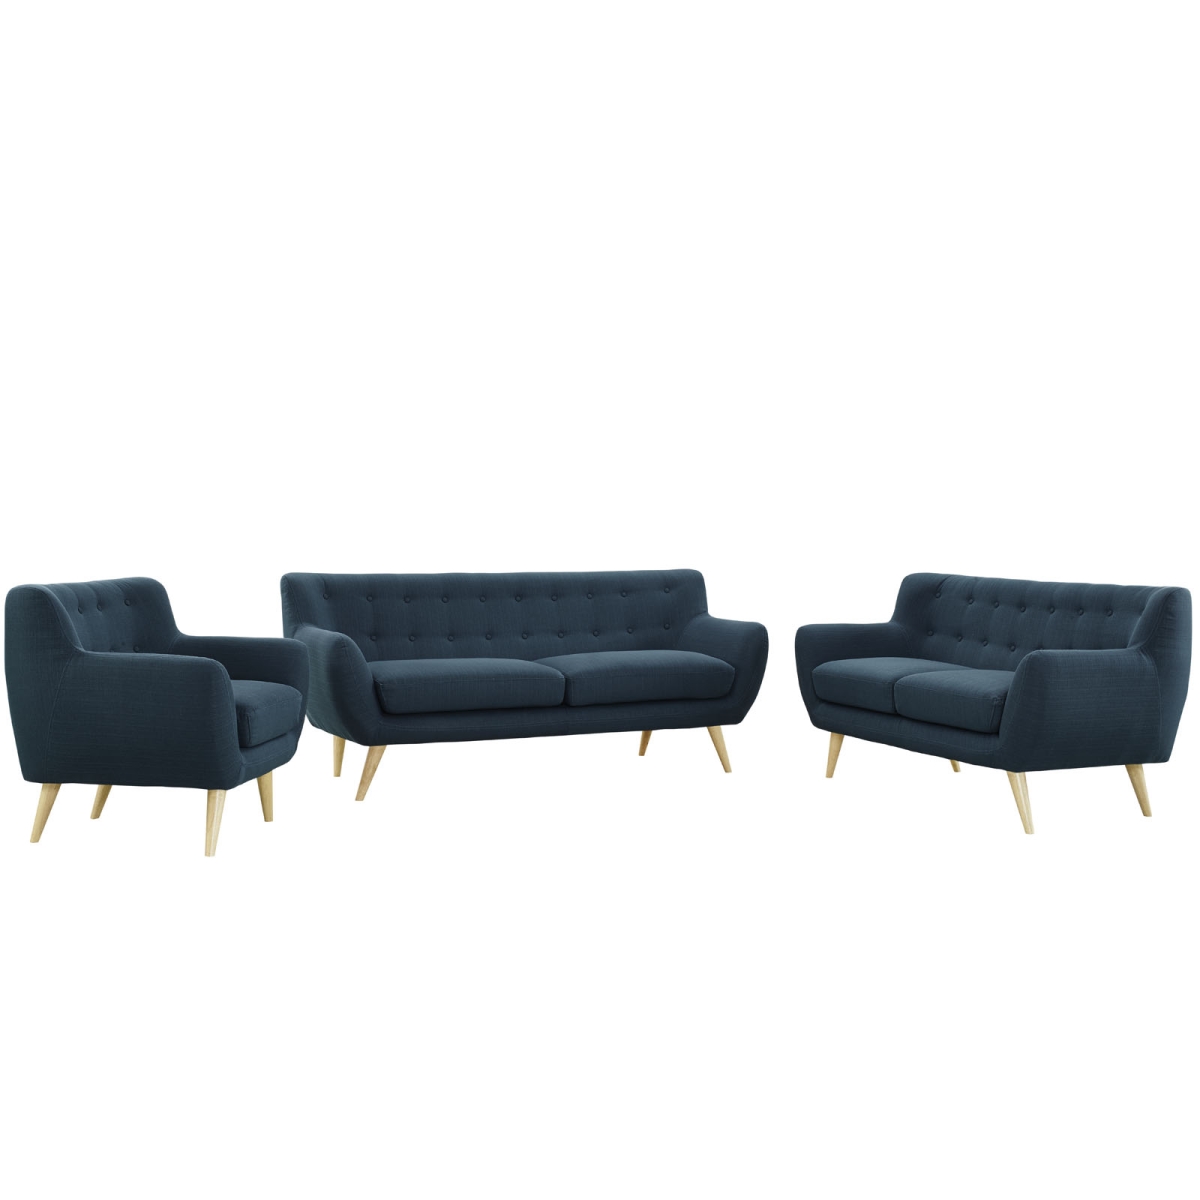 Eastend Eei-1782-azu-set Remark Sofa, Loveseat & Armchair Set In Tufted Azure Fabric On Natural Wood Legs